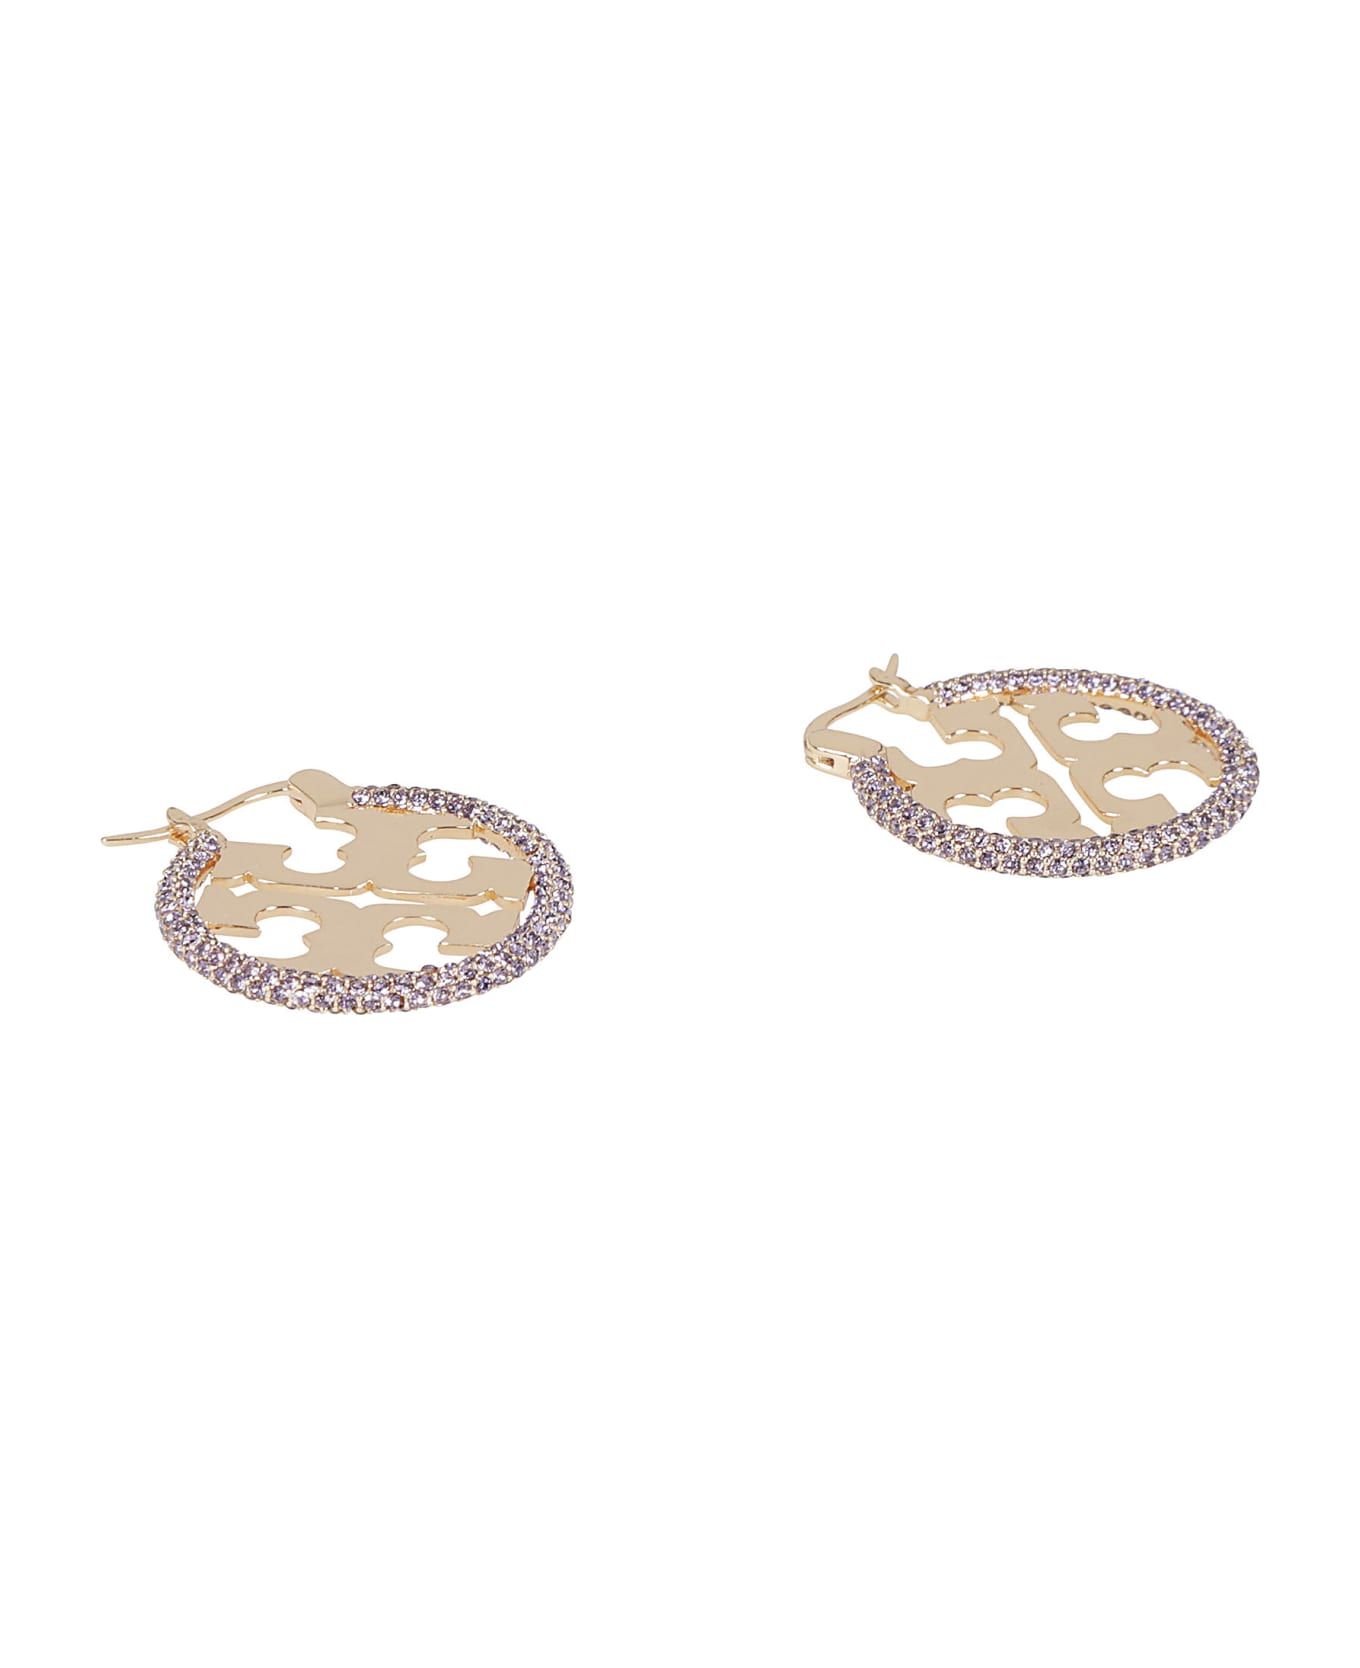 Tory Burch Crystal Embellished Logo Earrings - Tory Gold/Purple